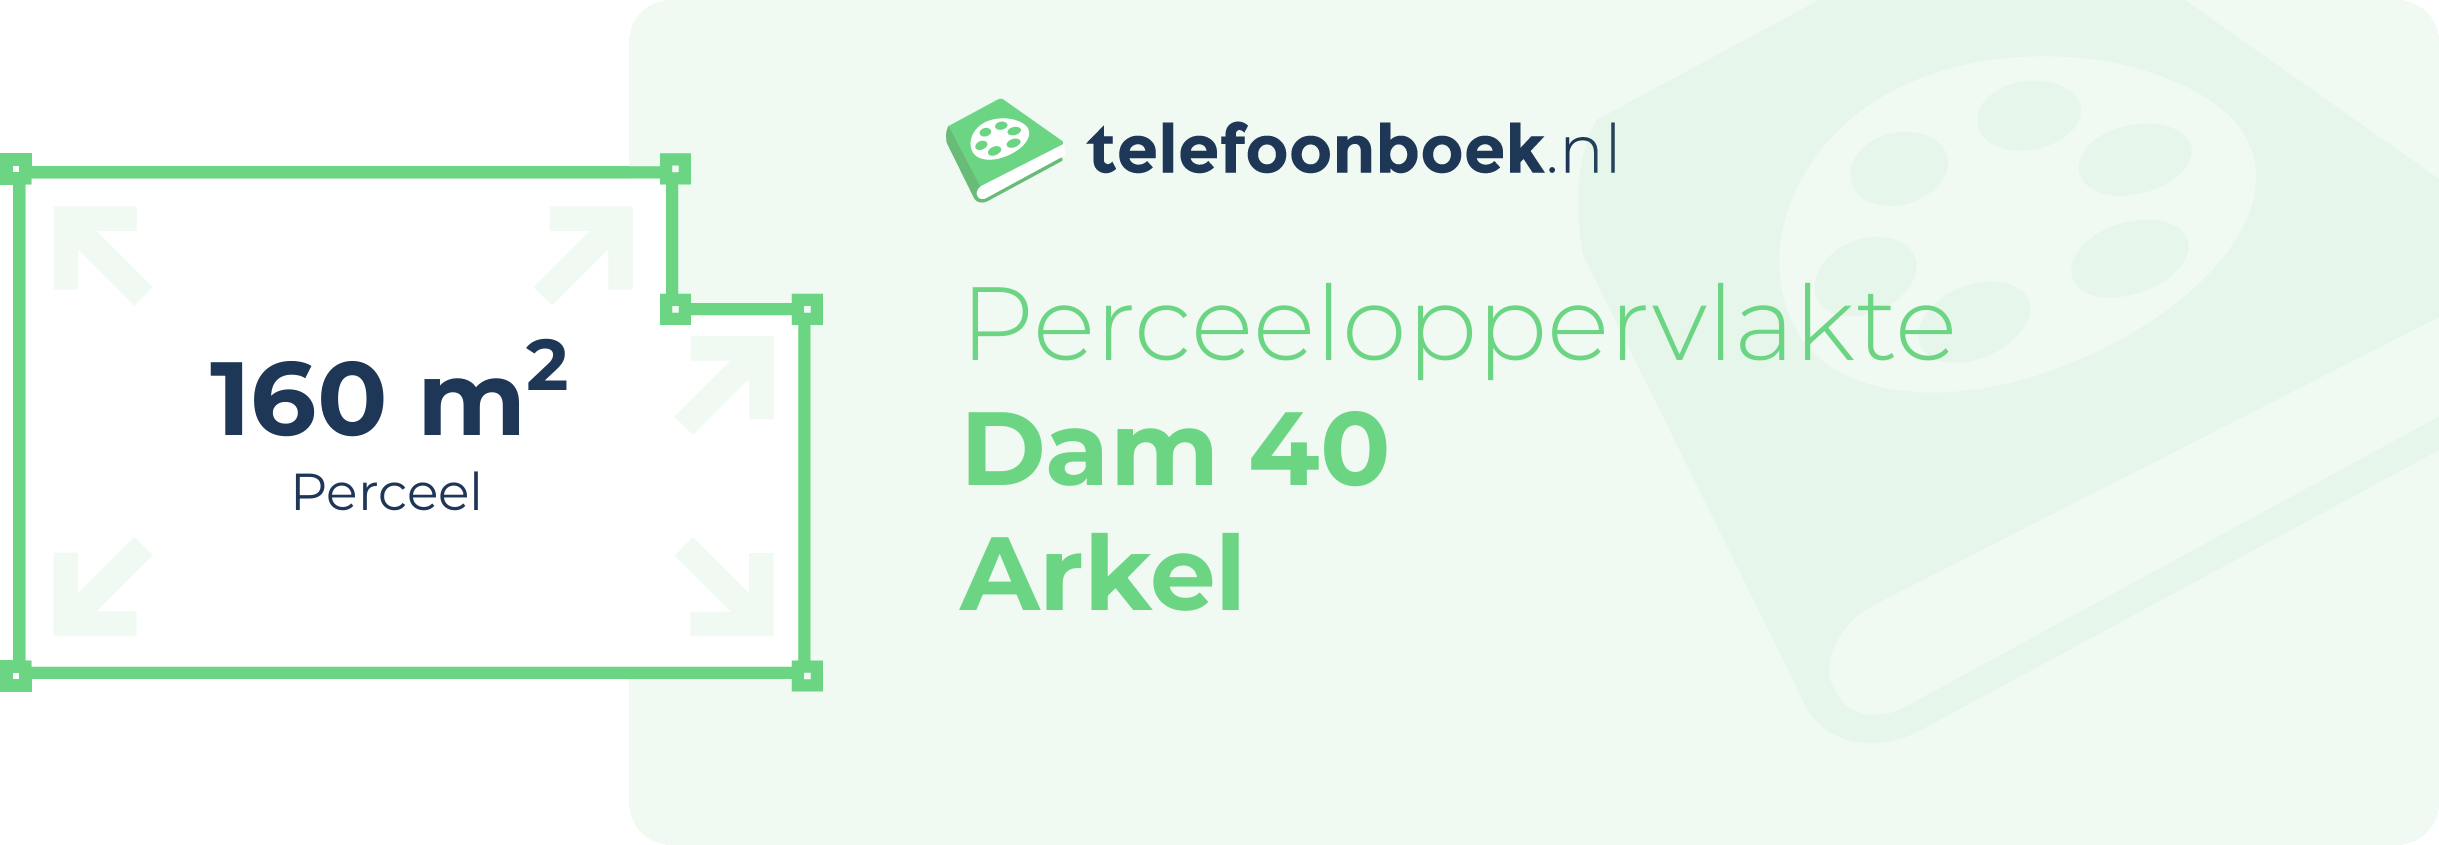 Perceeloppervlakte Dam 40 Arkel